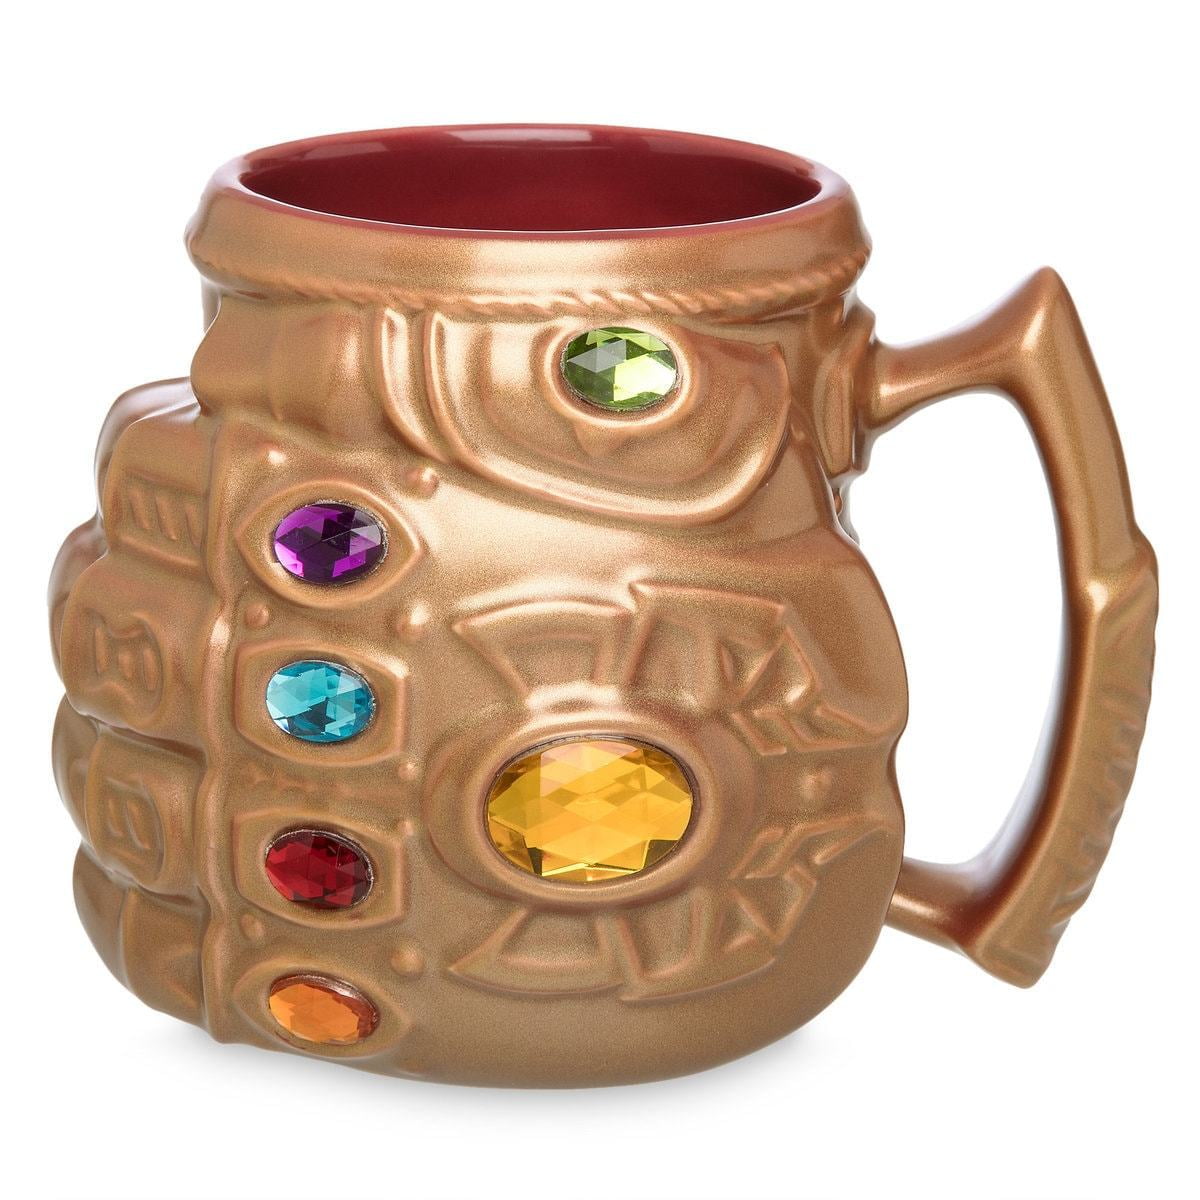 Thanos Infinity Gauntlet Mug Marvel Avengers Infinity guerre Lait Tasse à café NEUF